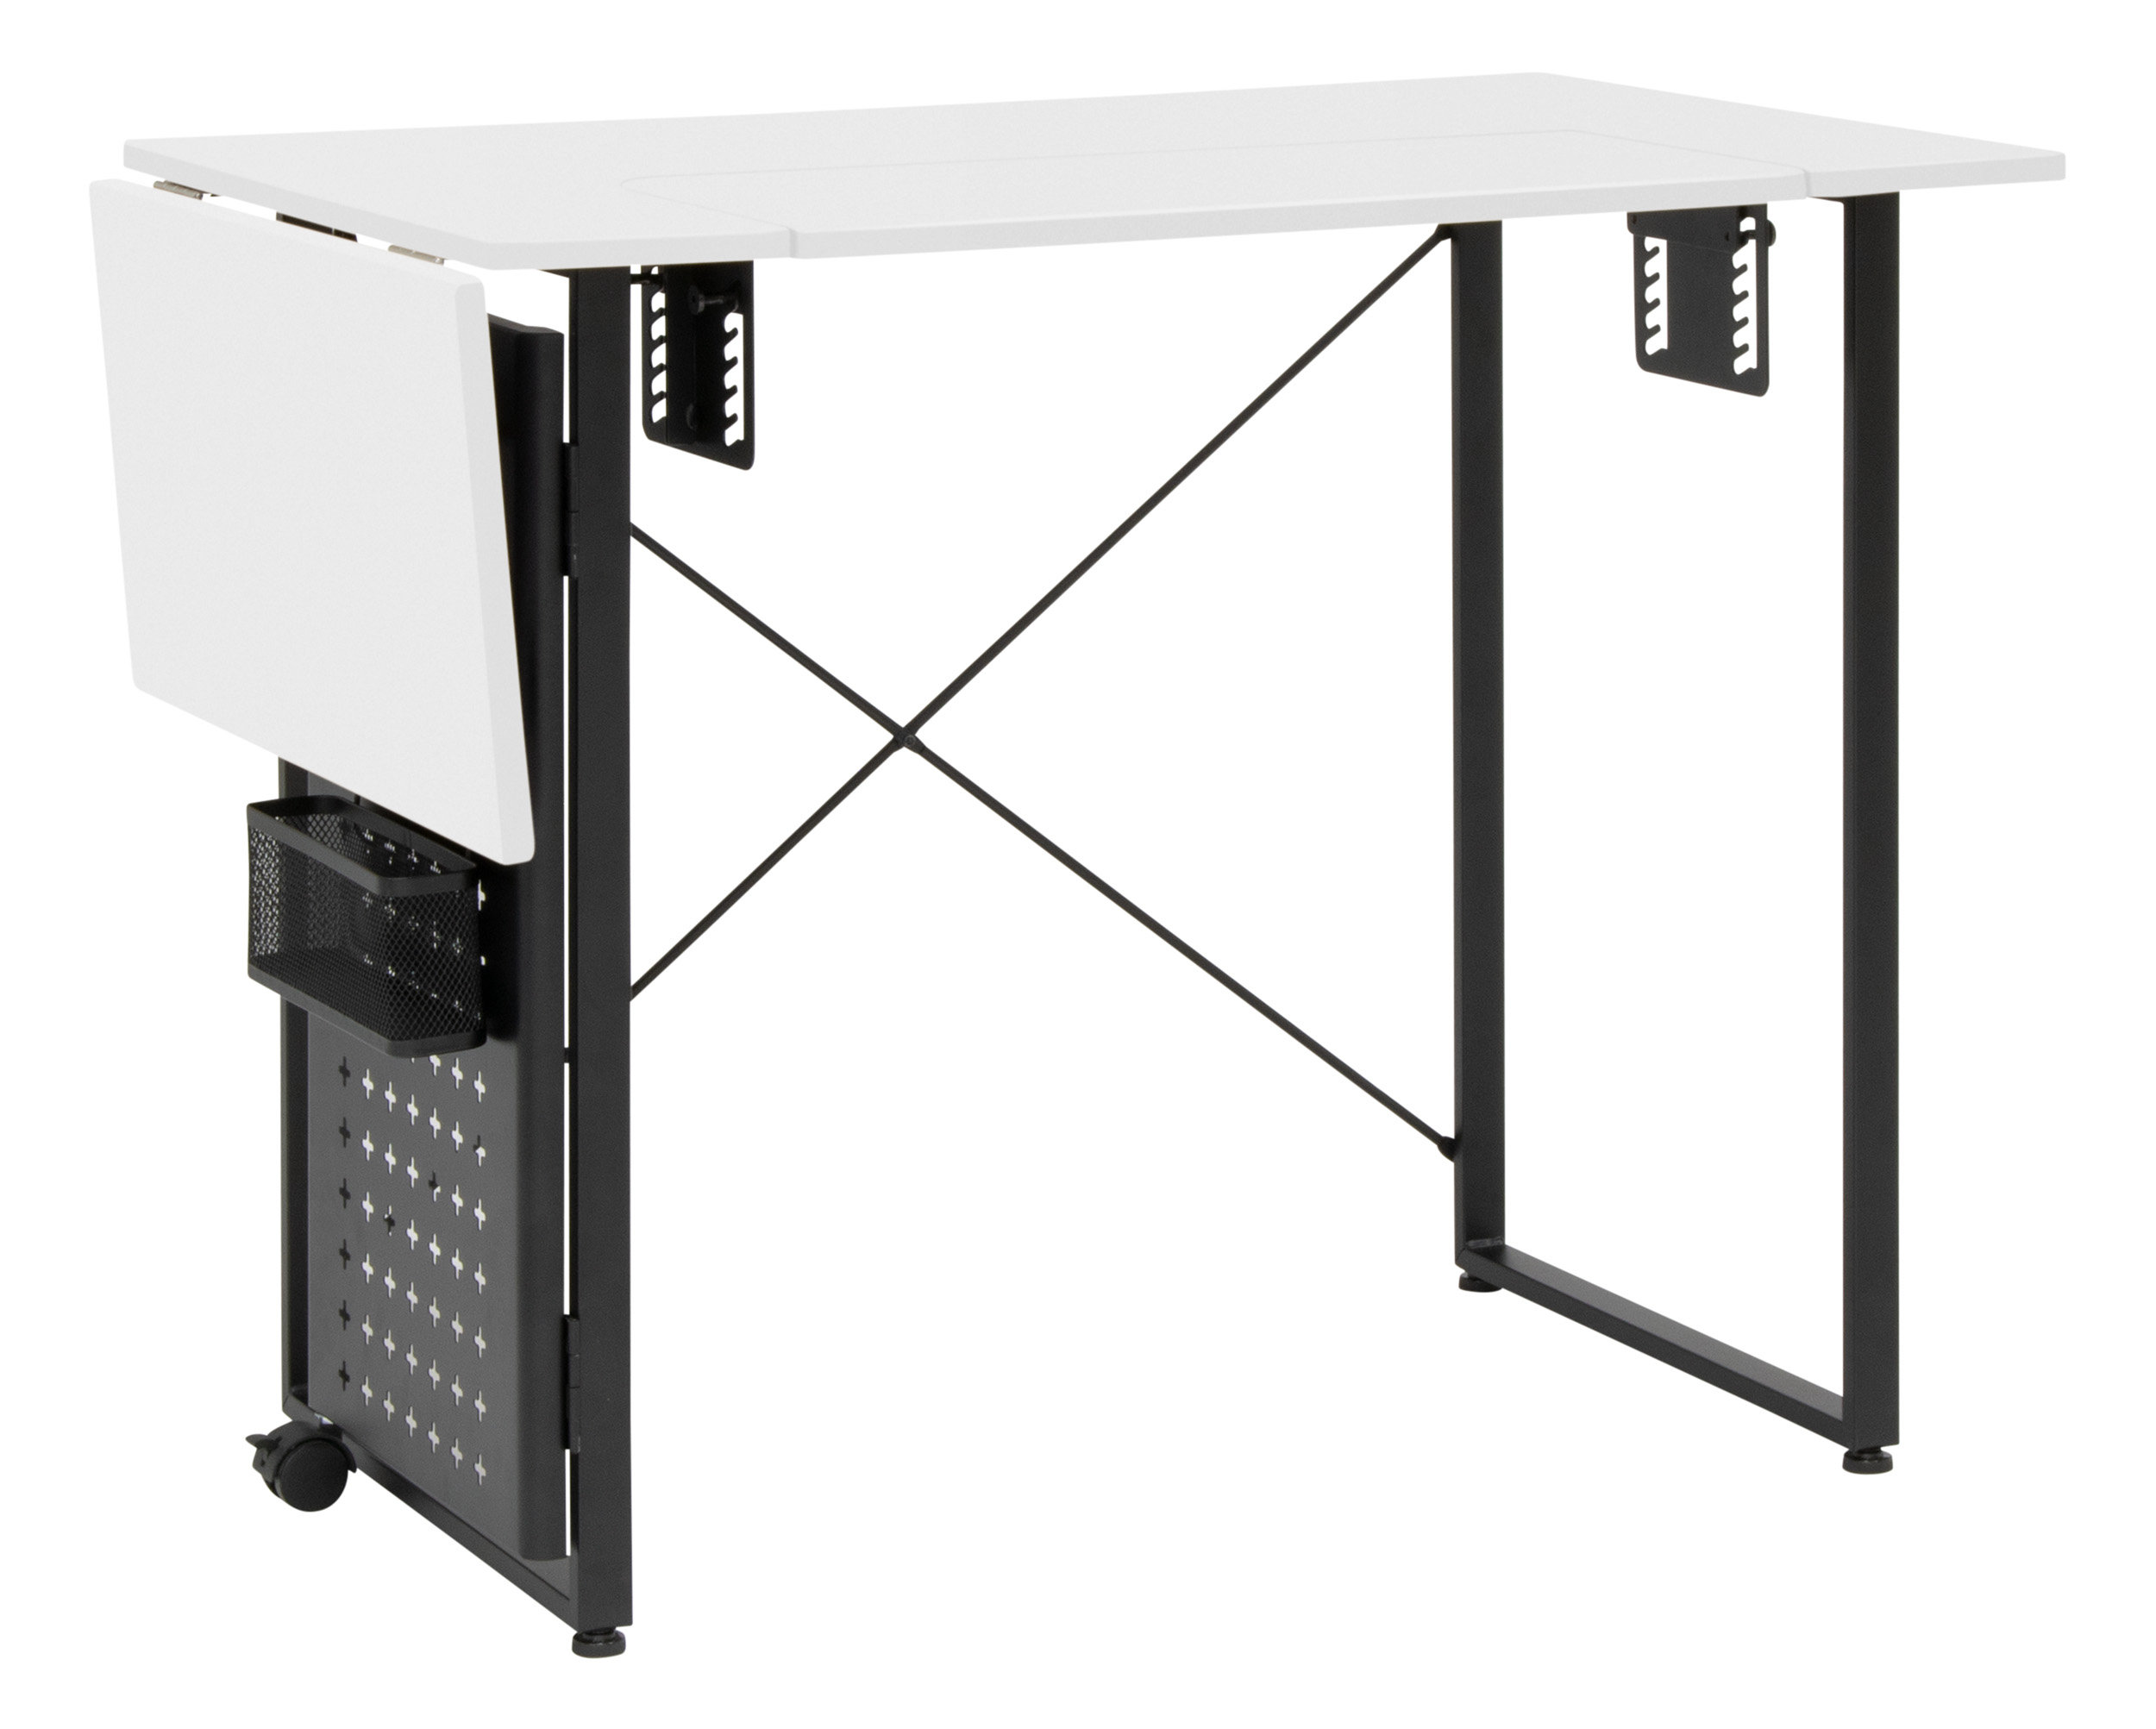 Sew Ready Pivot Swingout Storage Panel Sewing Table, Graphite/White